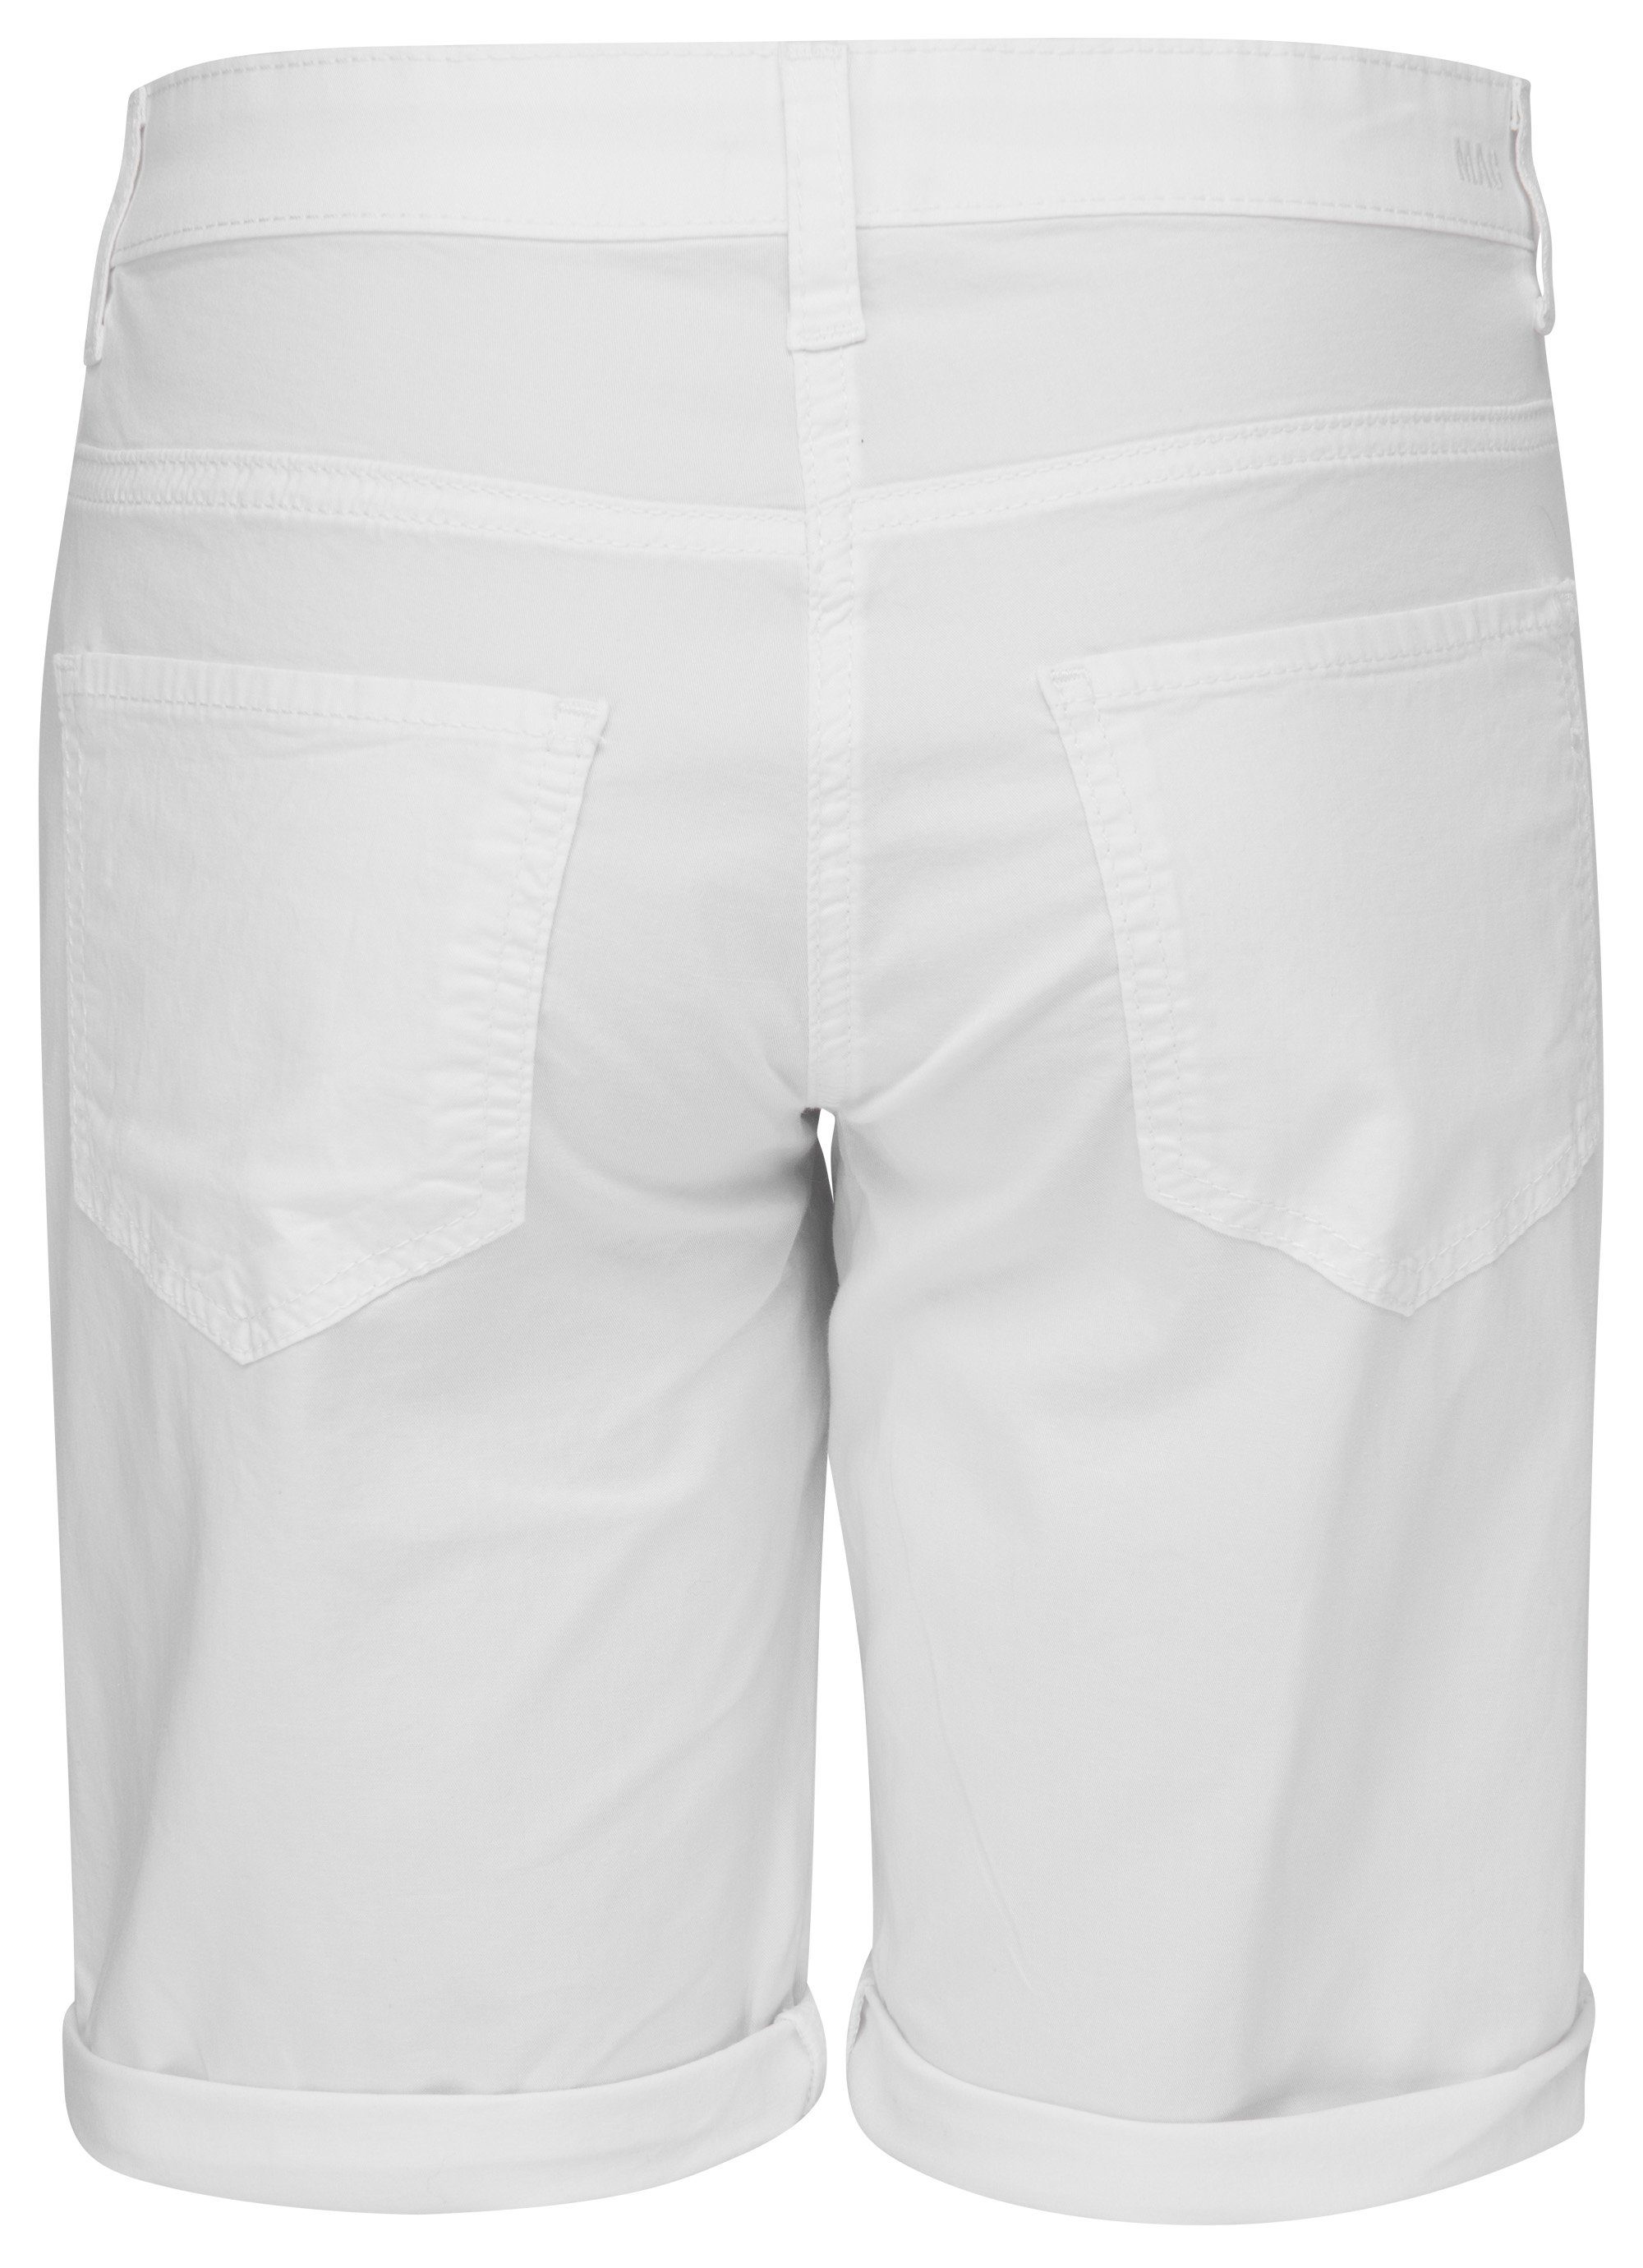 SHORTY Stretch-Jeans white 2387-00-0415 clean MAC MAC SUMMER 010